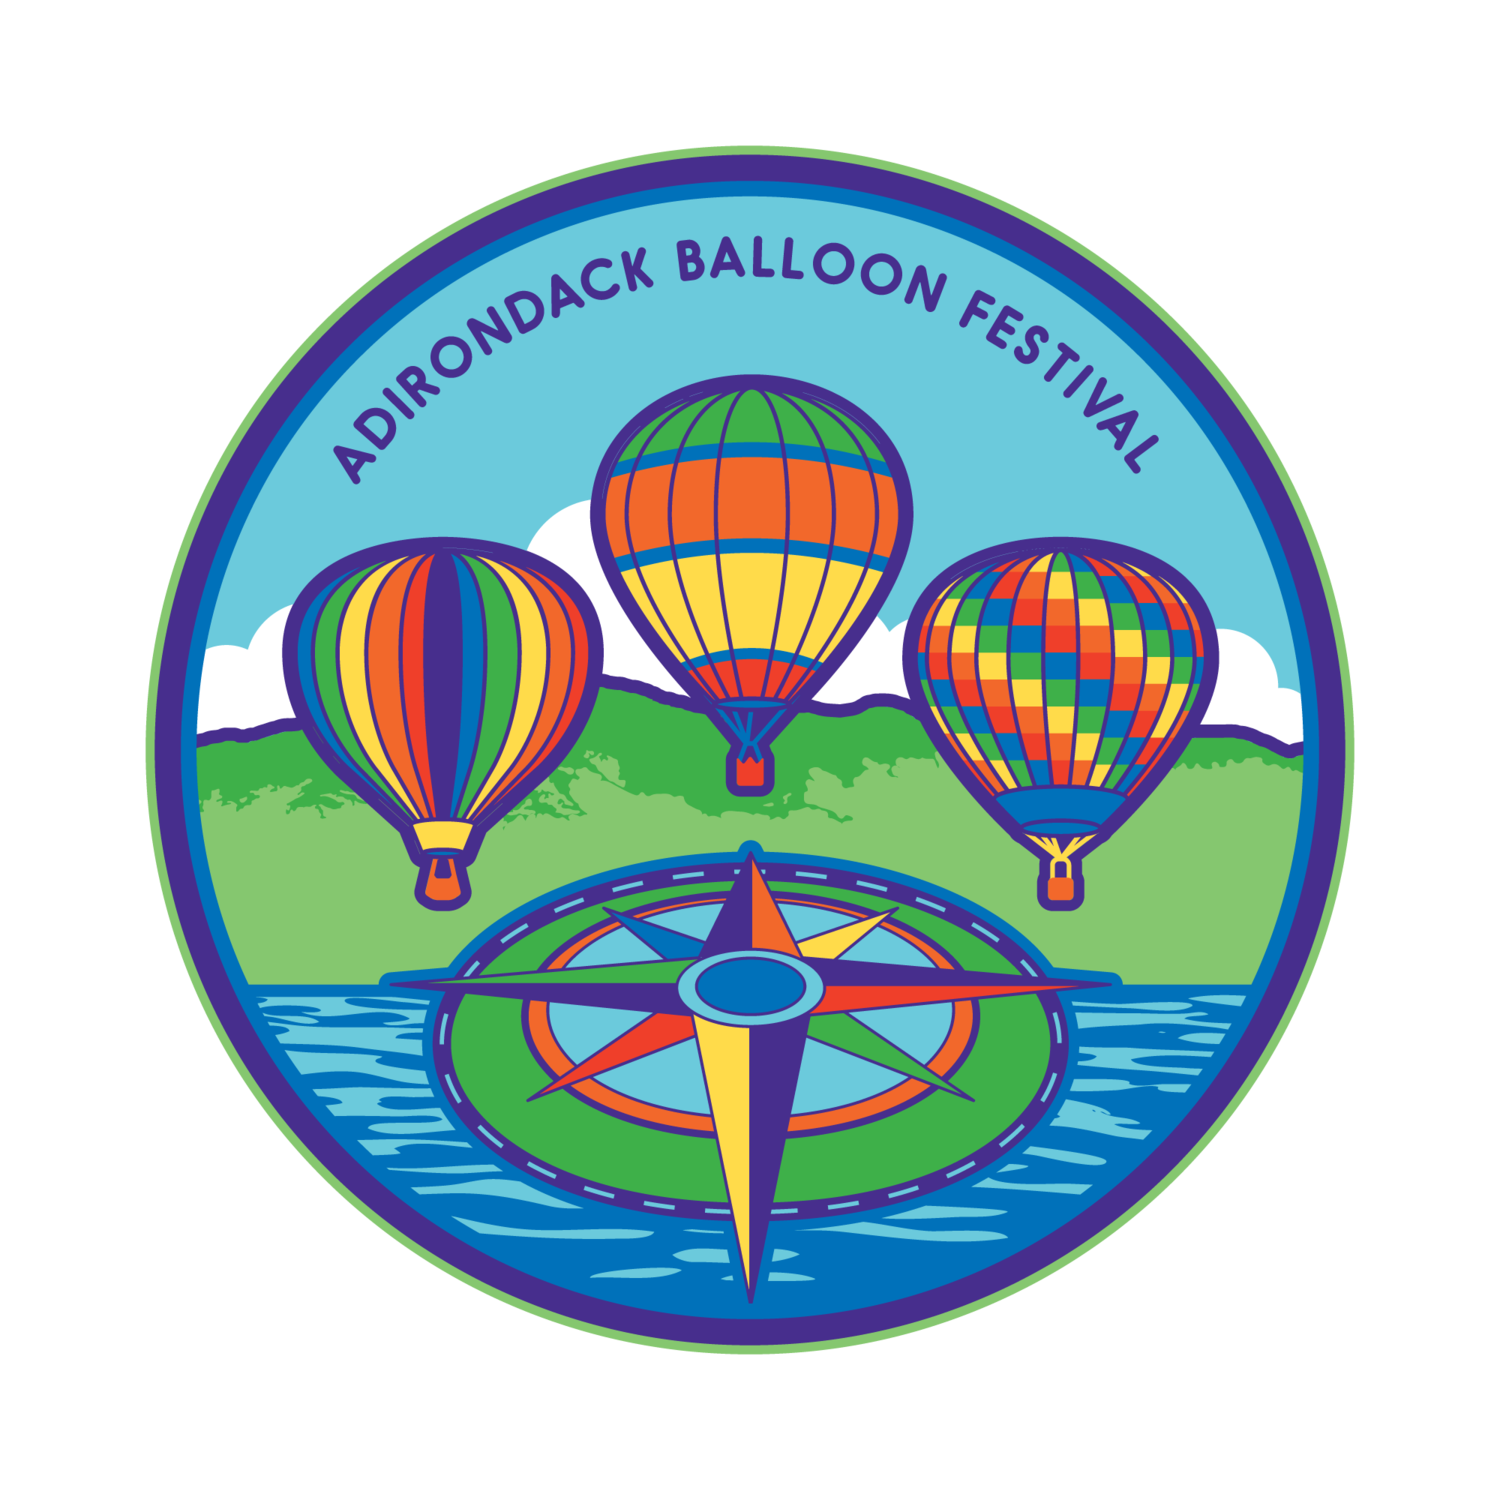 The adirondack balloon festival.